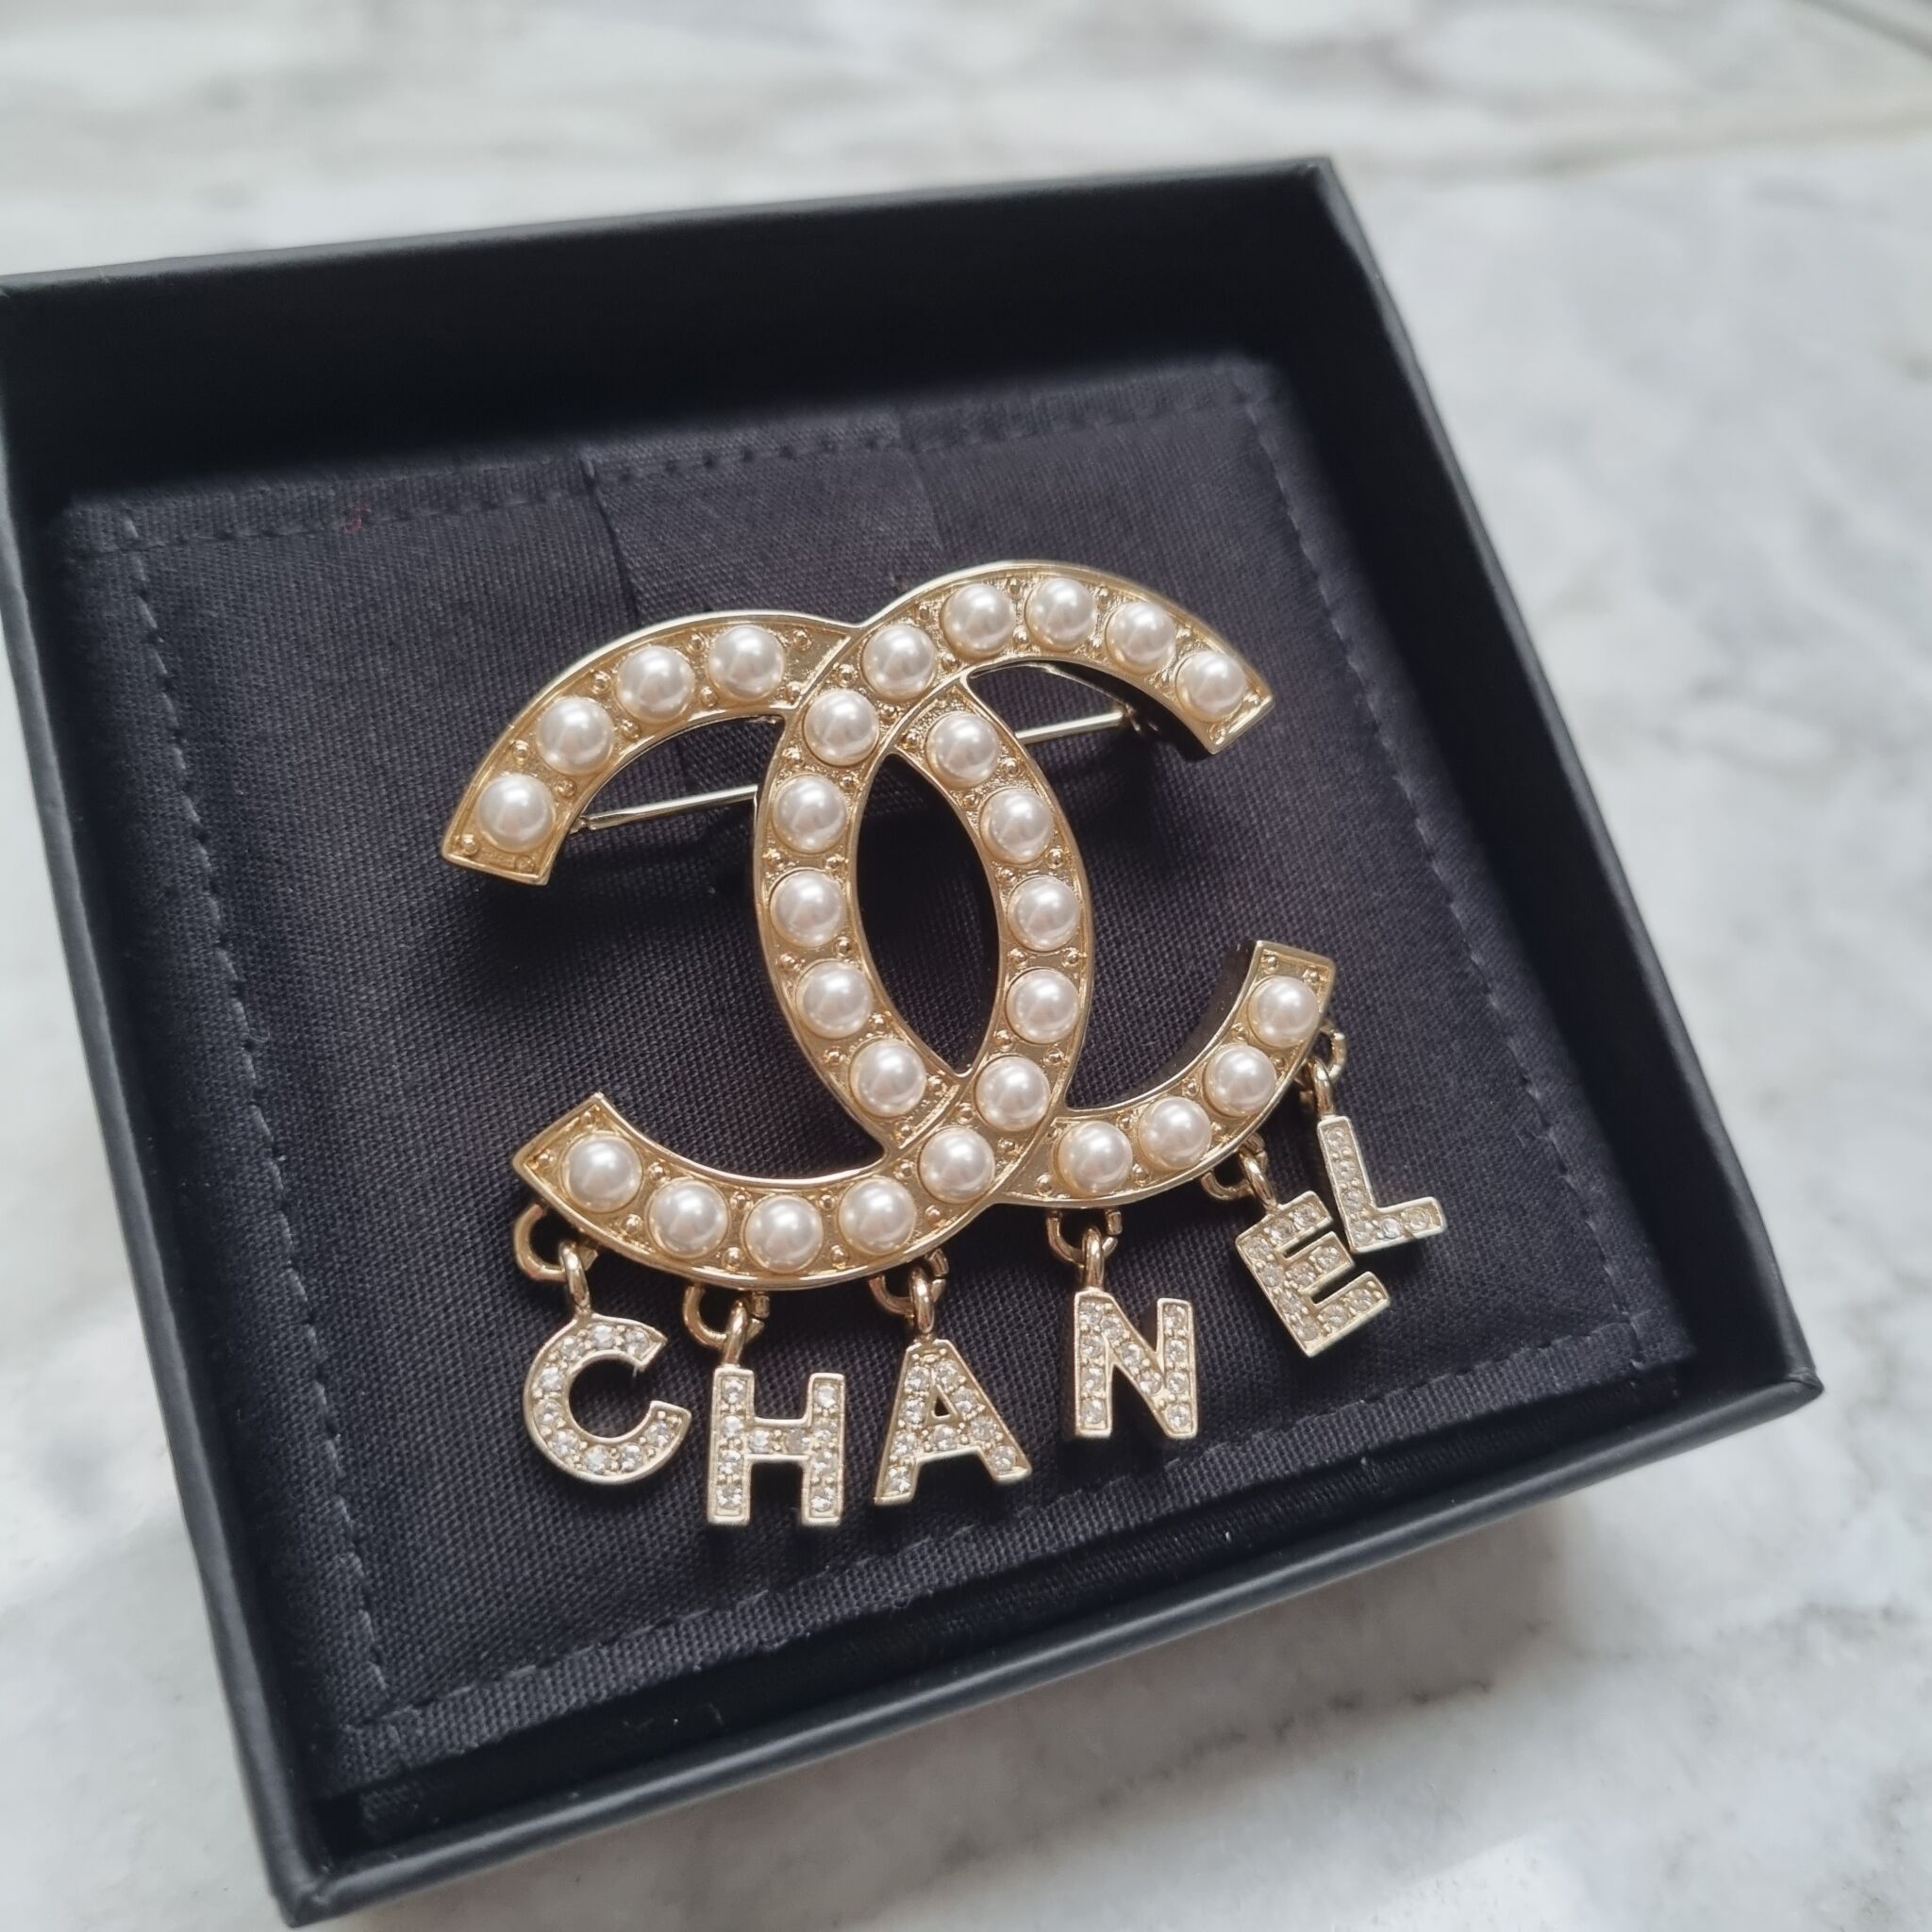 Chanel CC Charm Pearl Brooch, Gold/Pearls - Laulay Luxury